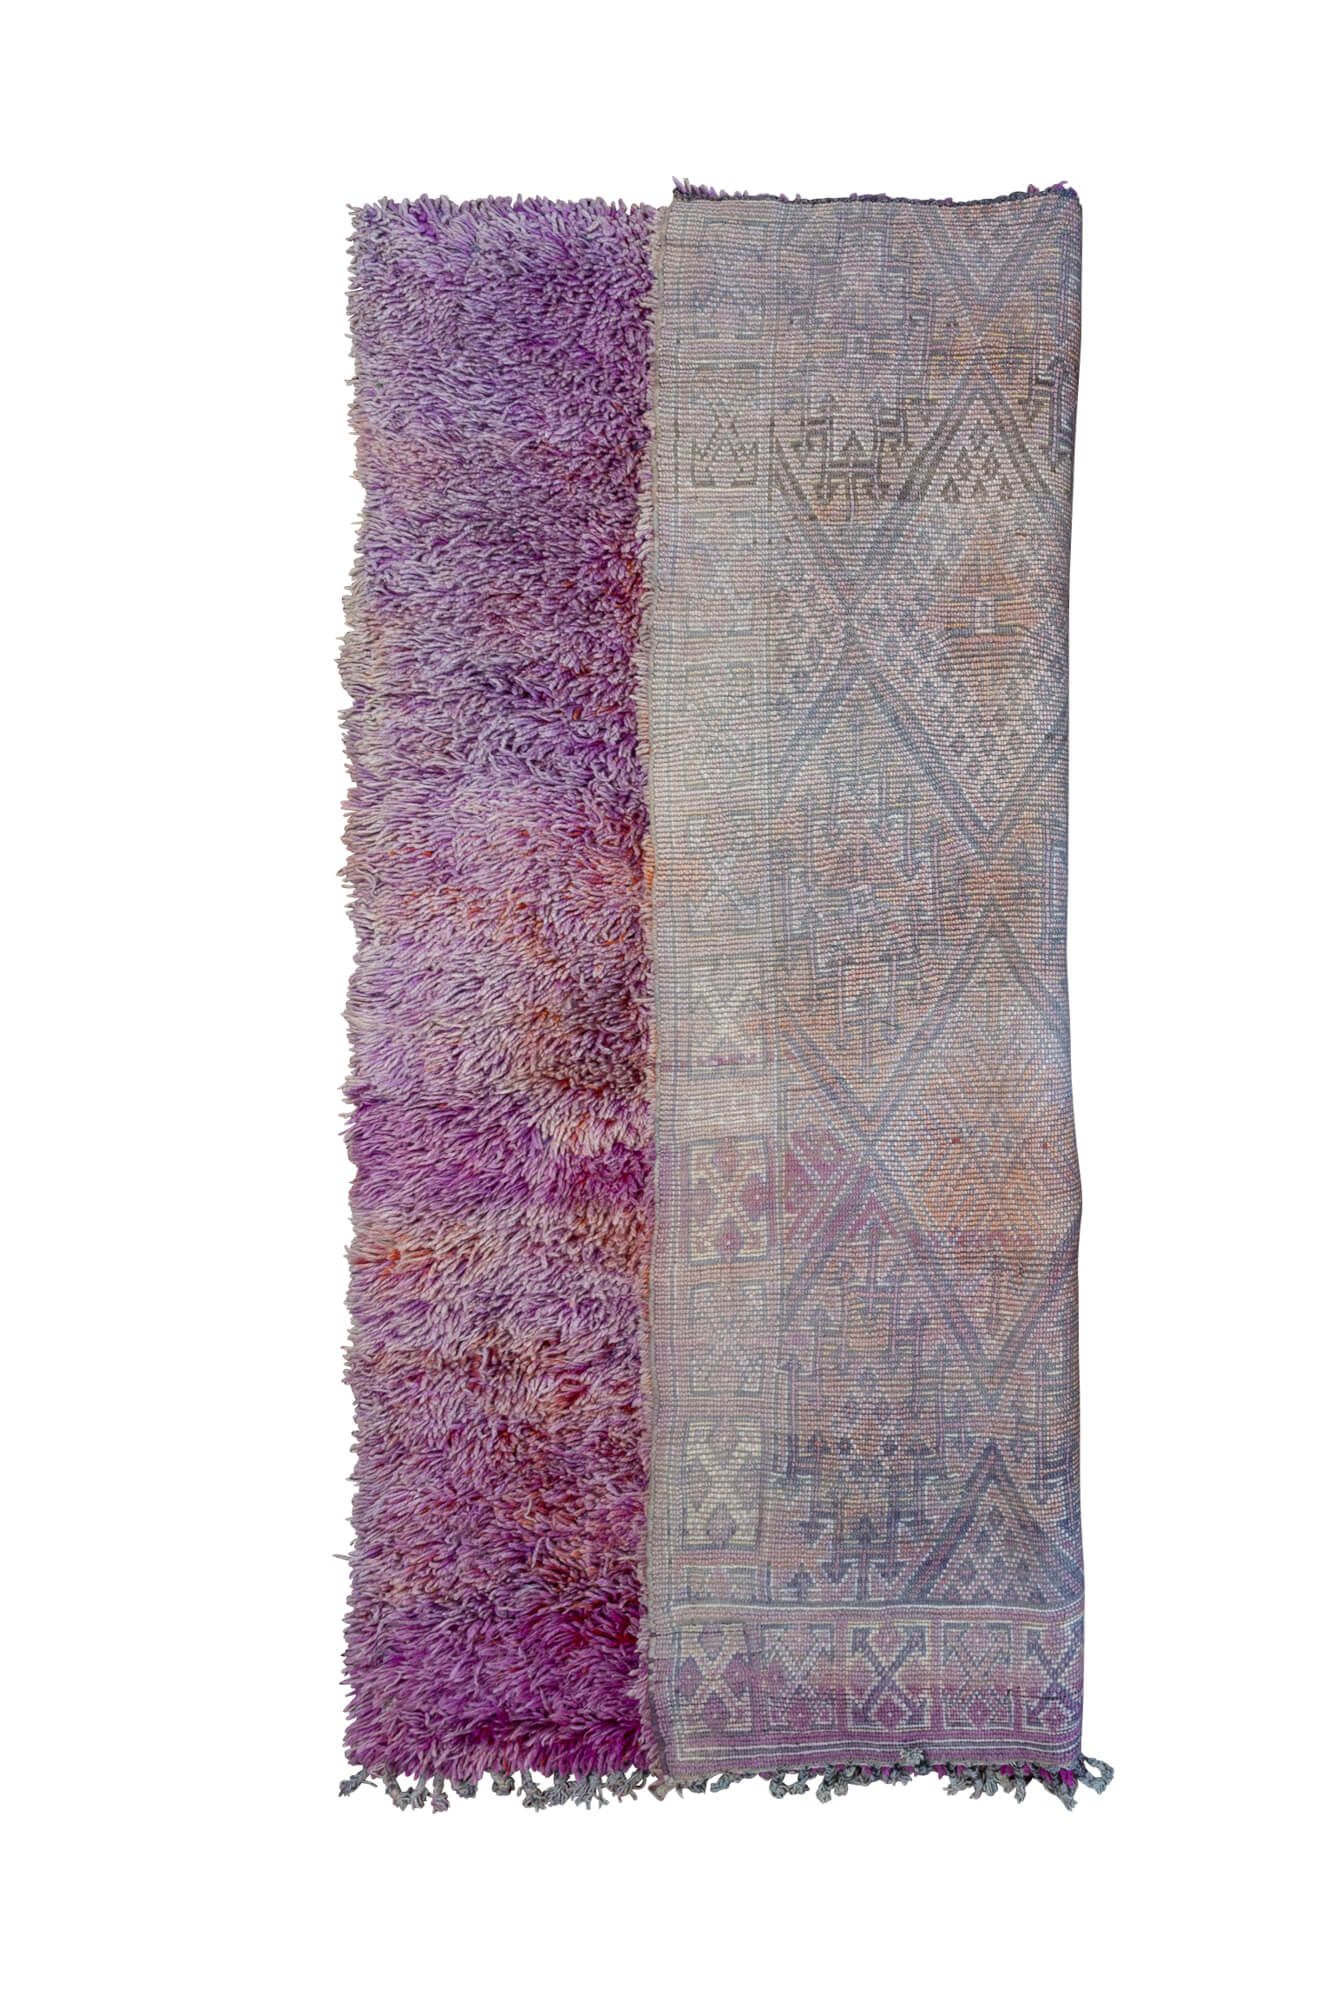 Shag pile purple and orange beni mguild moroccan rug with rug half flipped to show backside